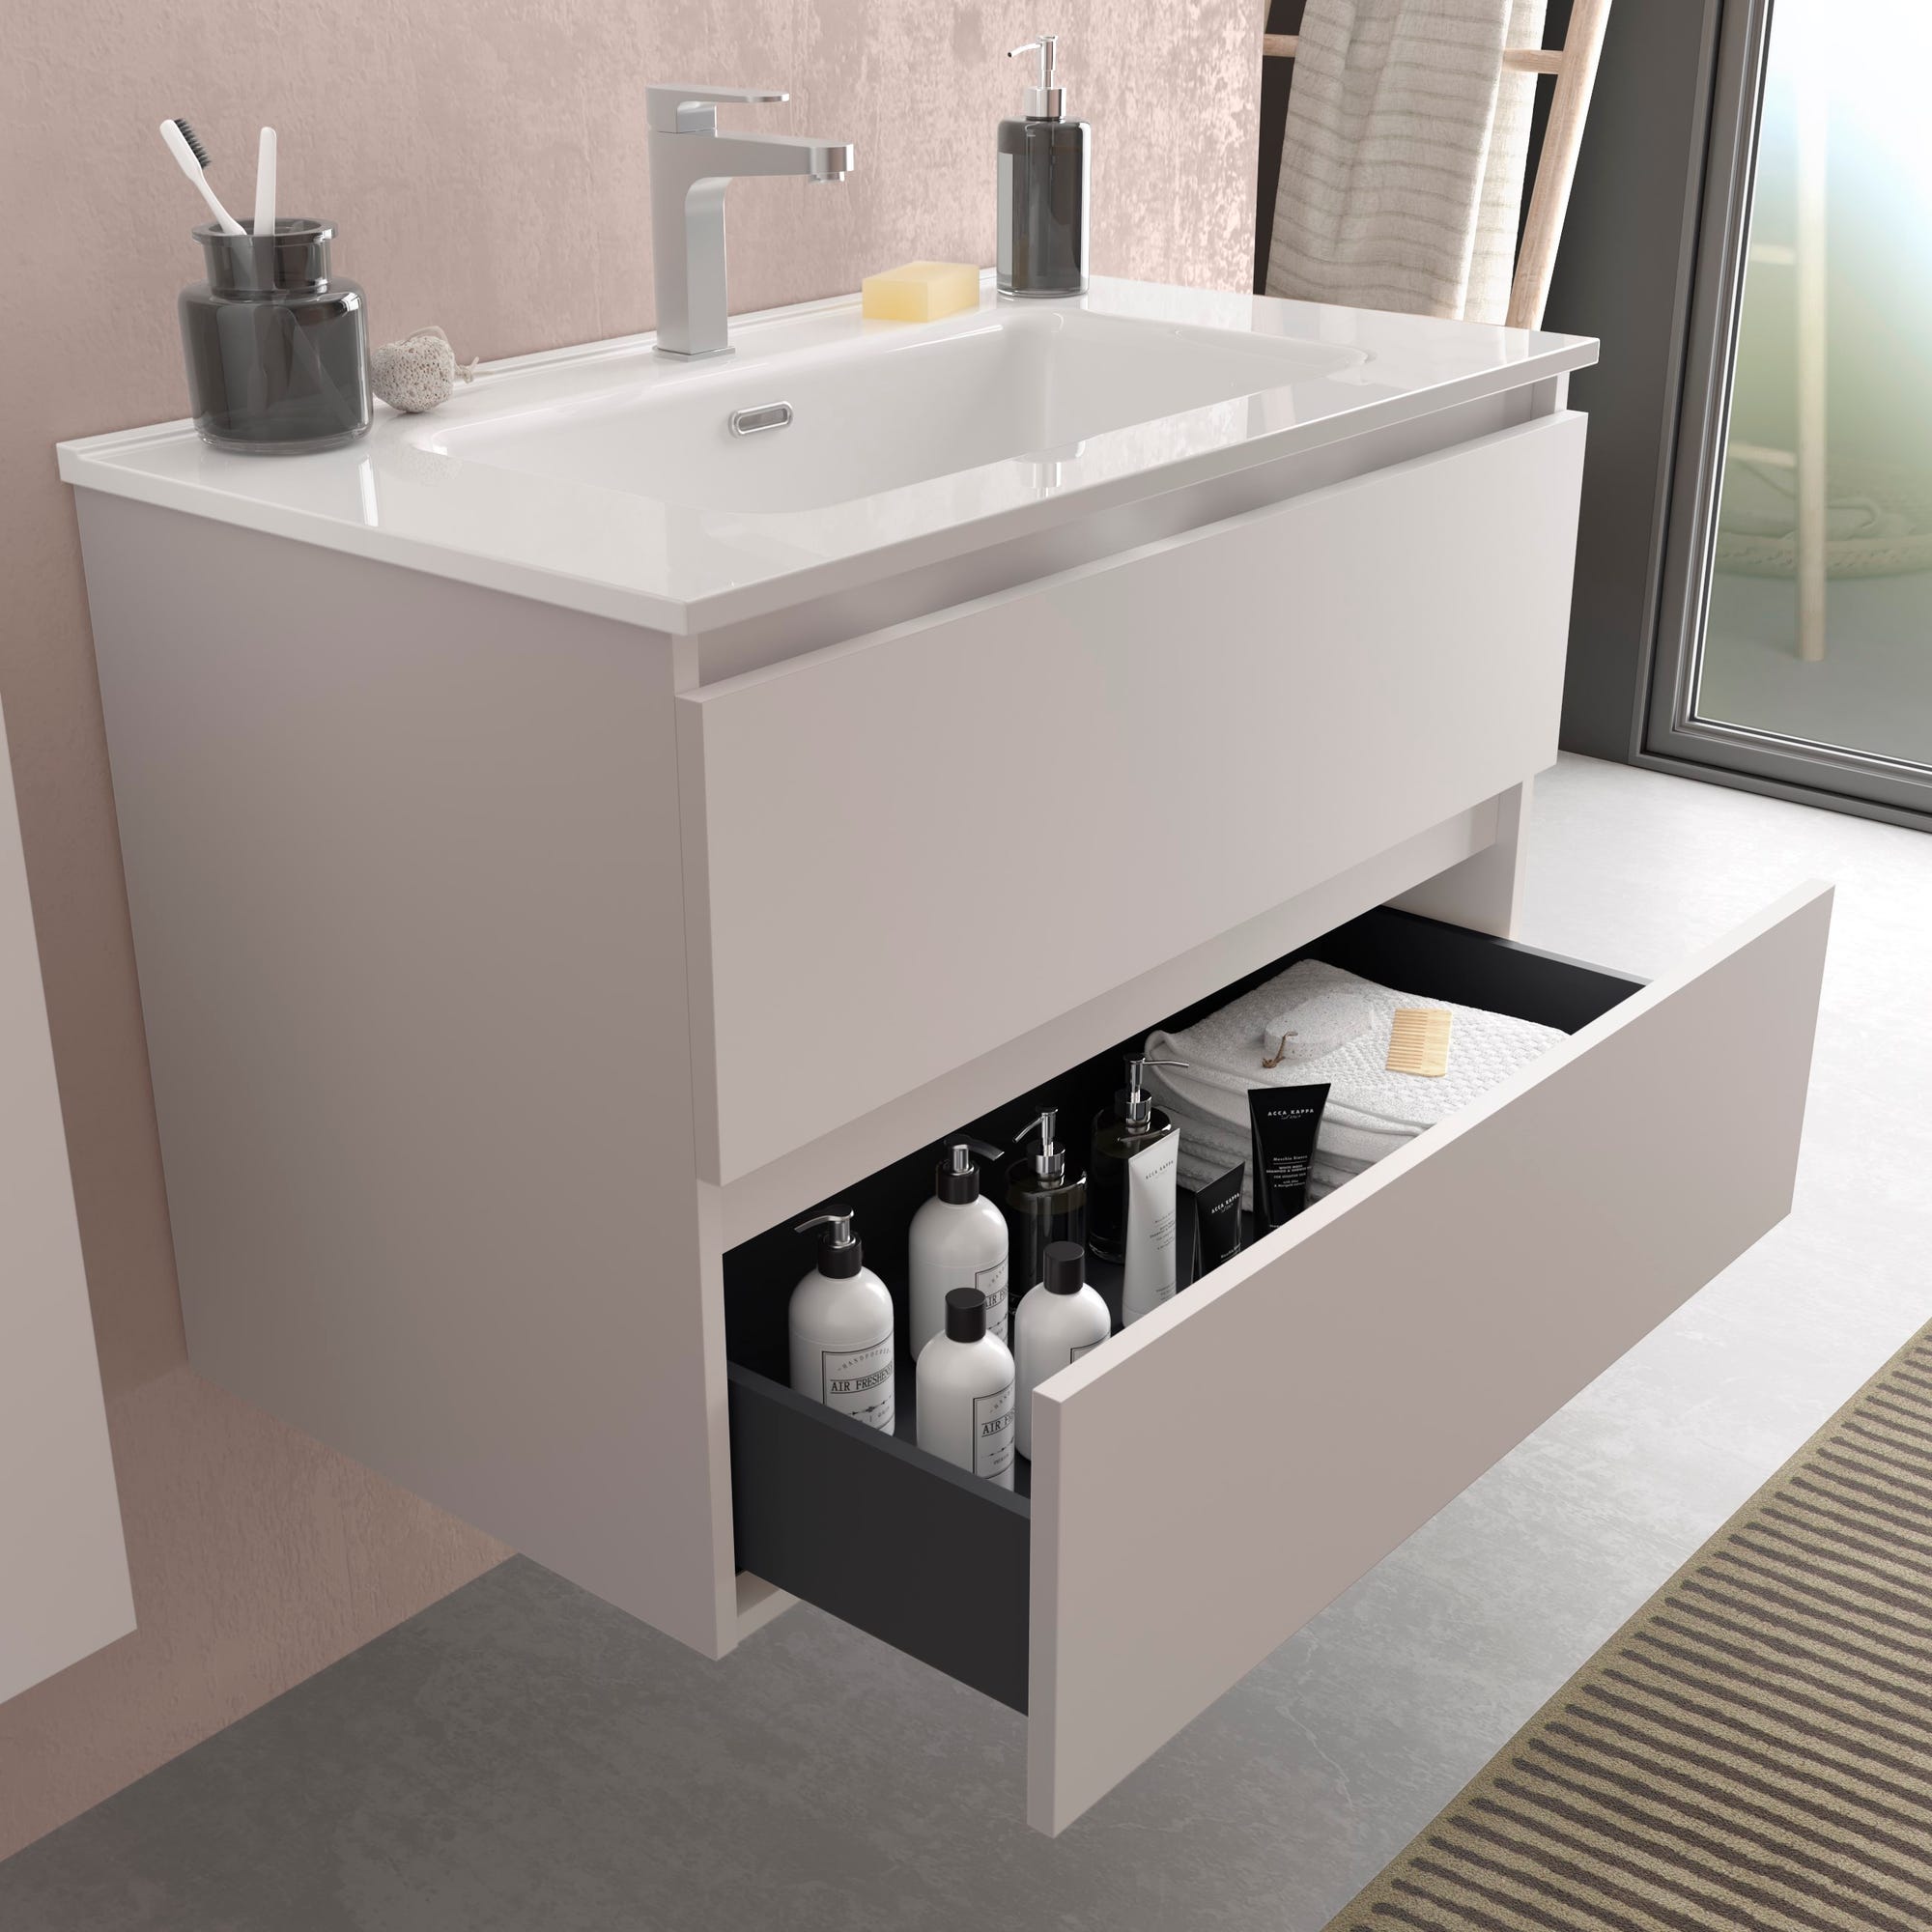 Meuble salle de bain - 70 cm - Avec plan vasque - Blanc mat - A suspendre - KARAIB 1